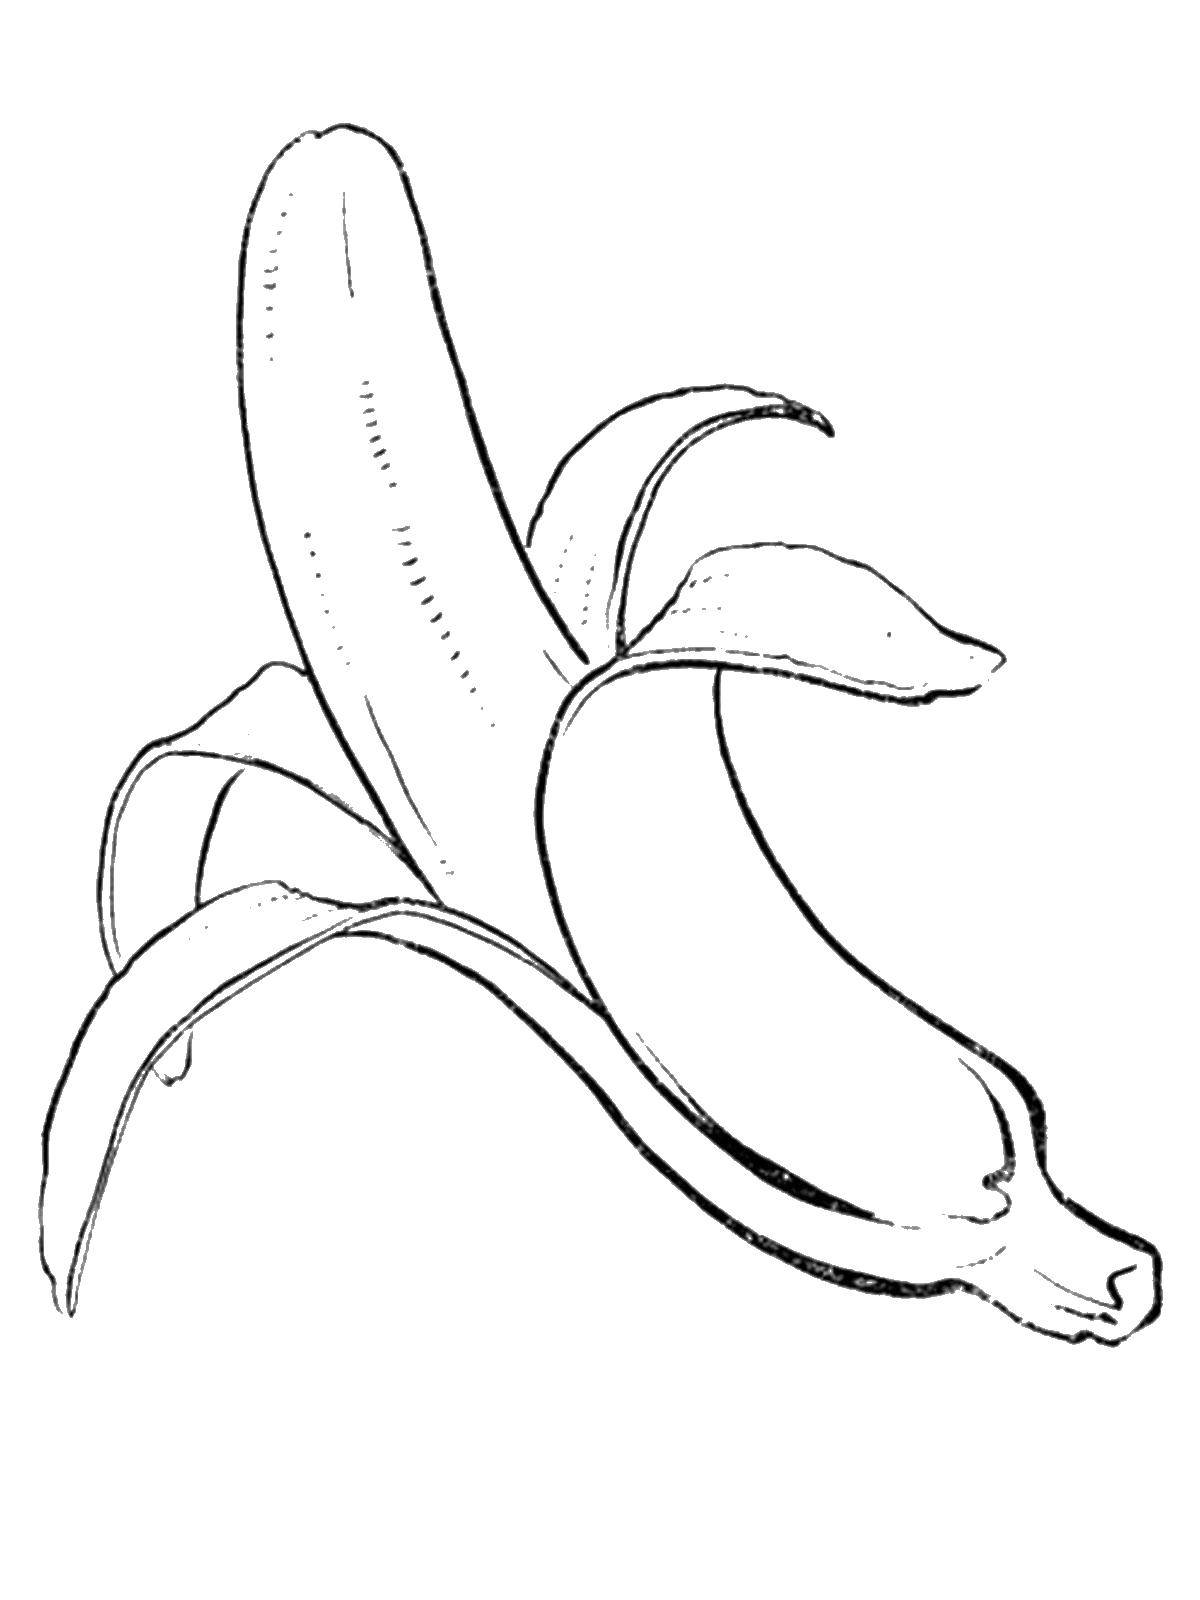 Coloring Opened banana. Category fruits. Tags:  fruit, bananas.